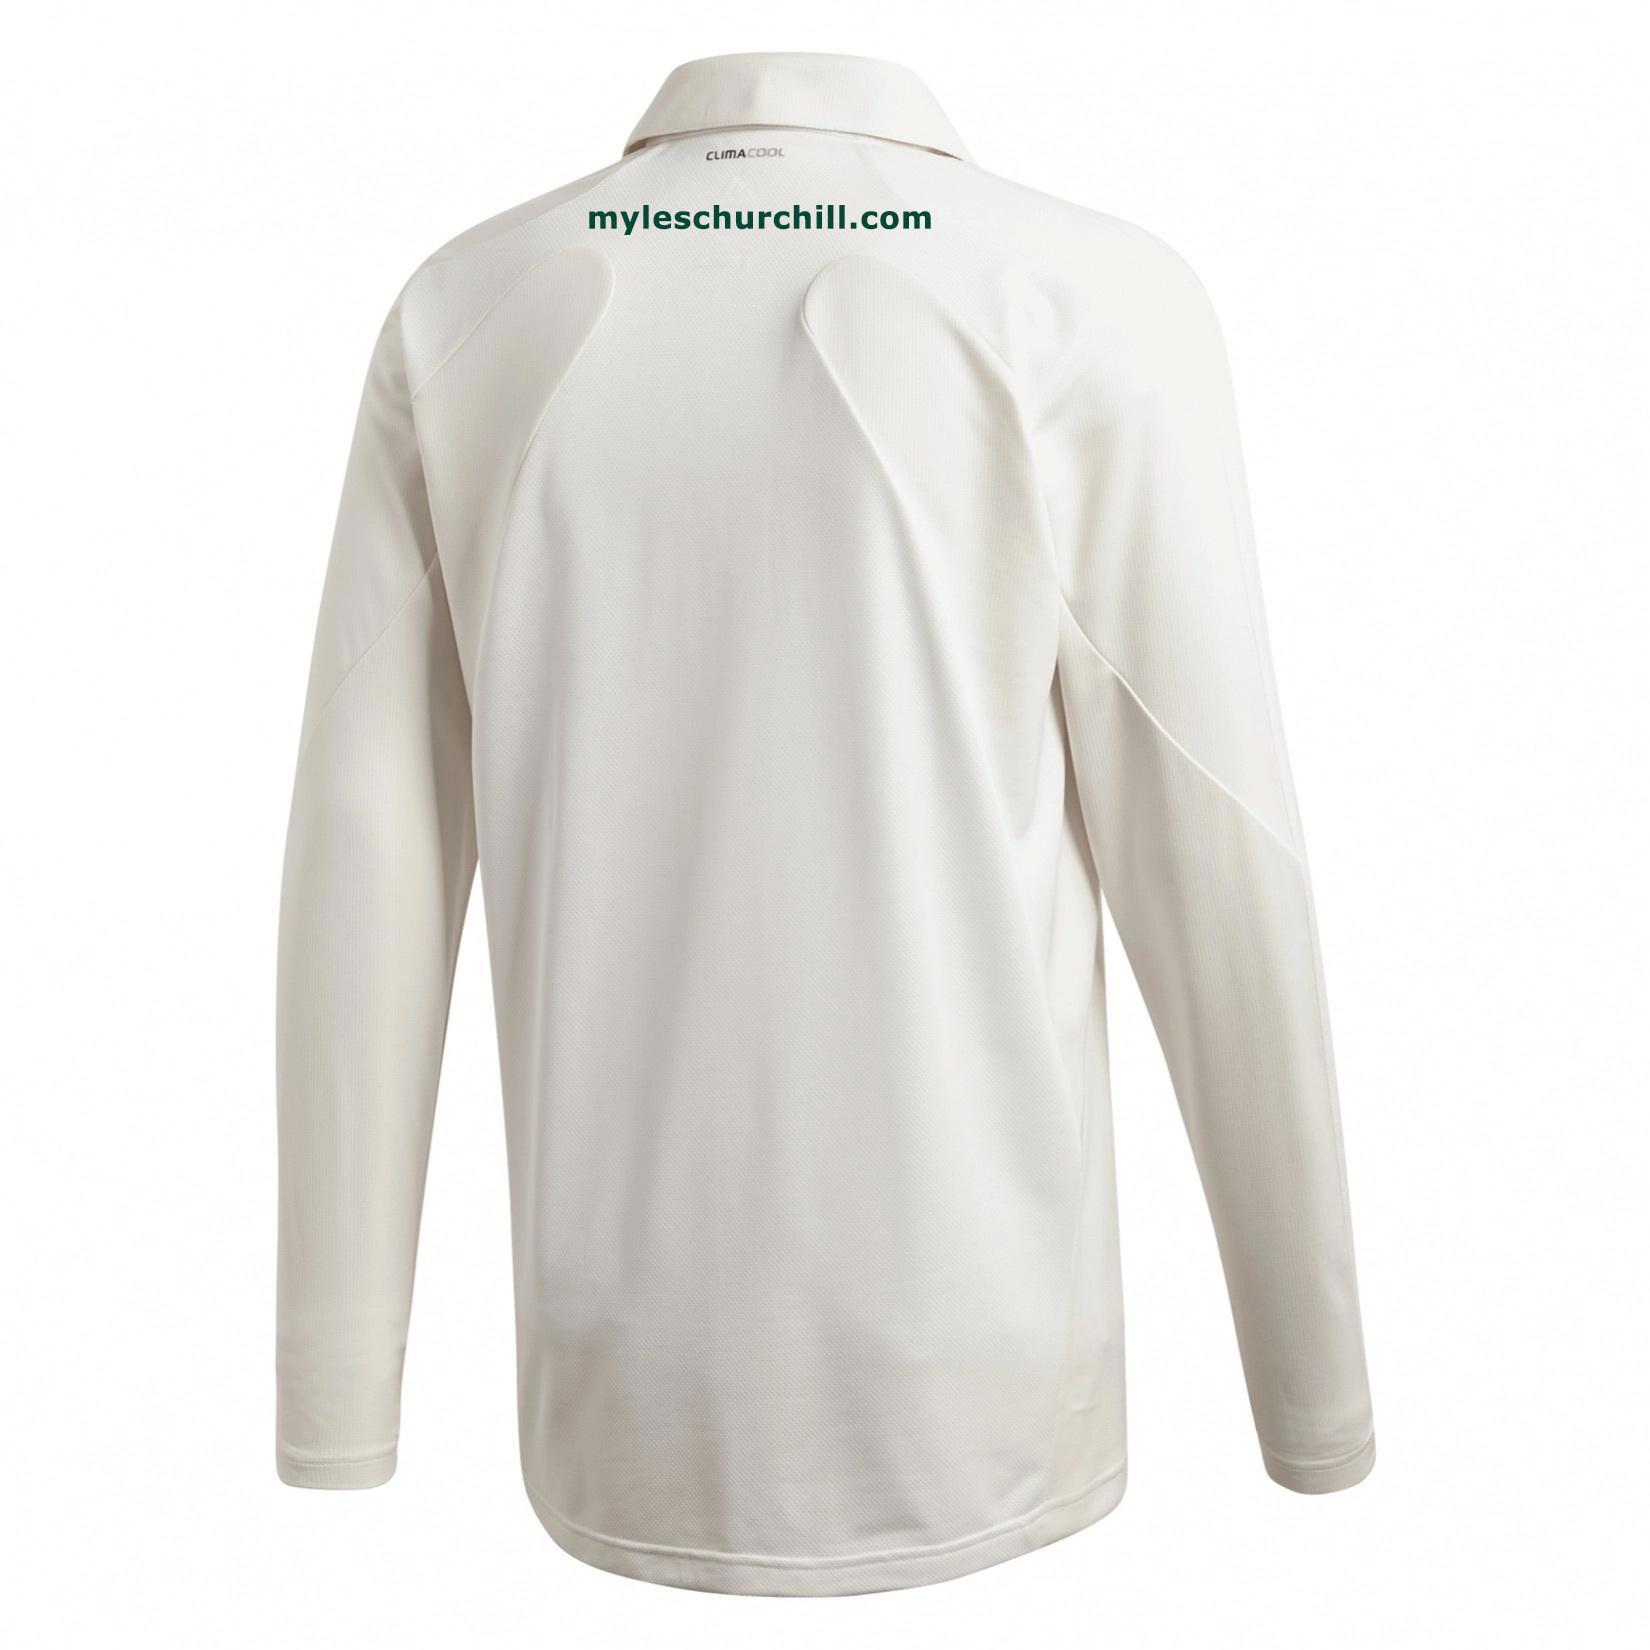 Adidas-LP Long Sleeve Cricket Shirt